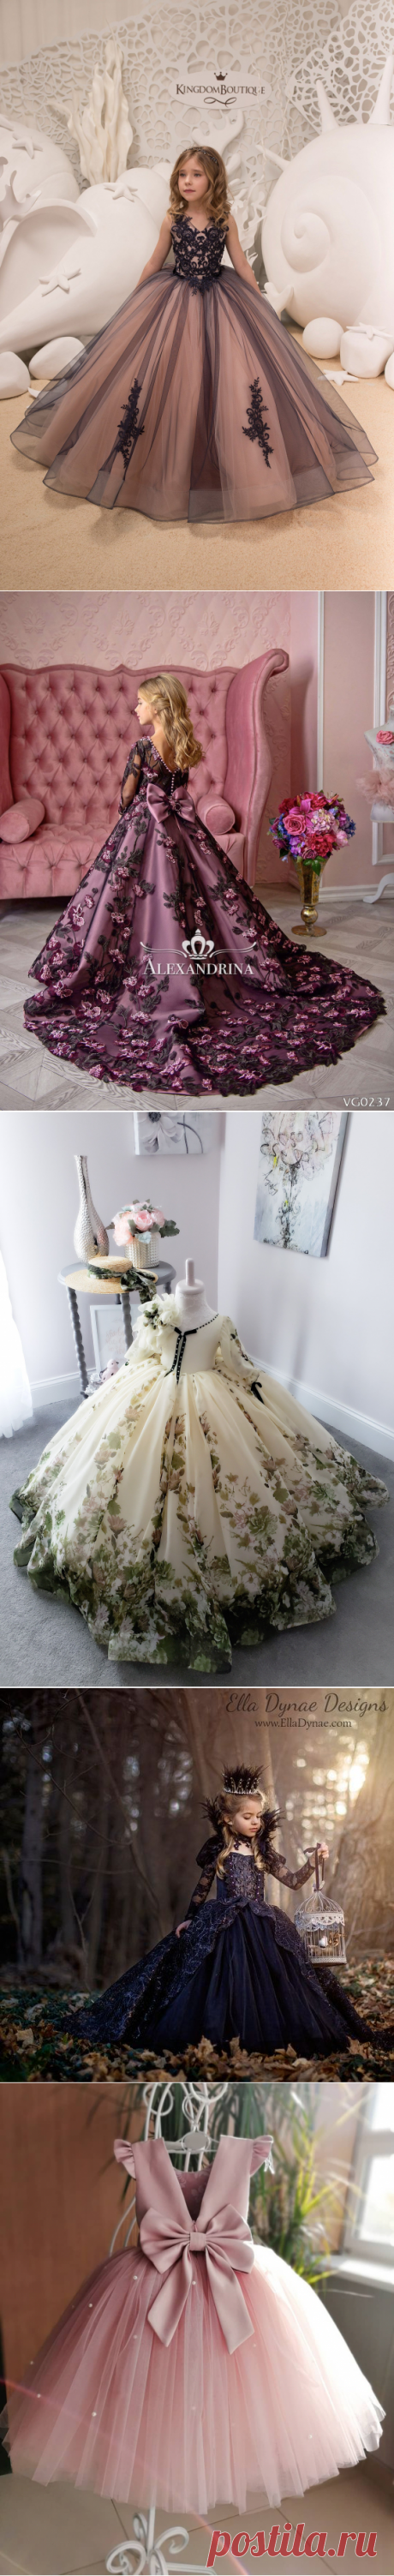 Navy and Pink Flower Girl Dress Birthday Wedding Party | Etsy - Salvabrani